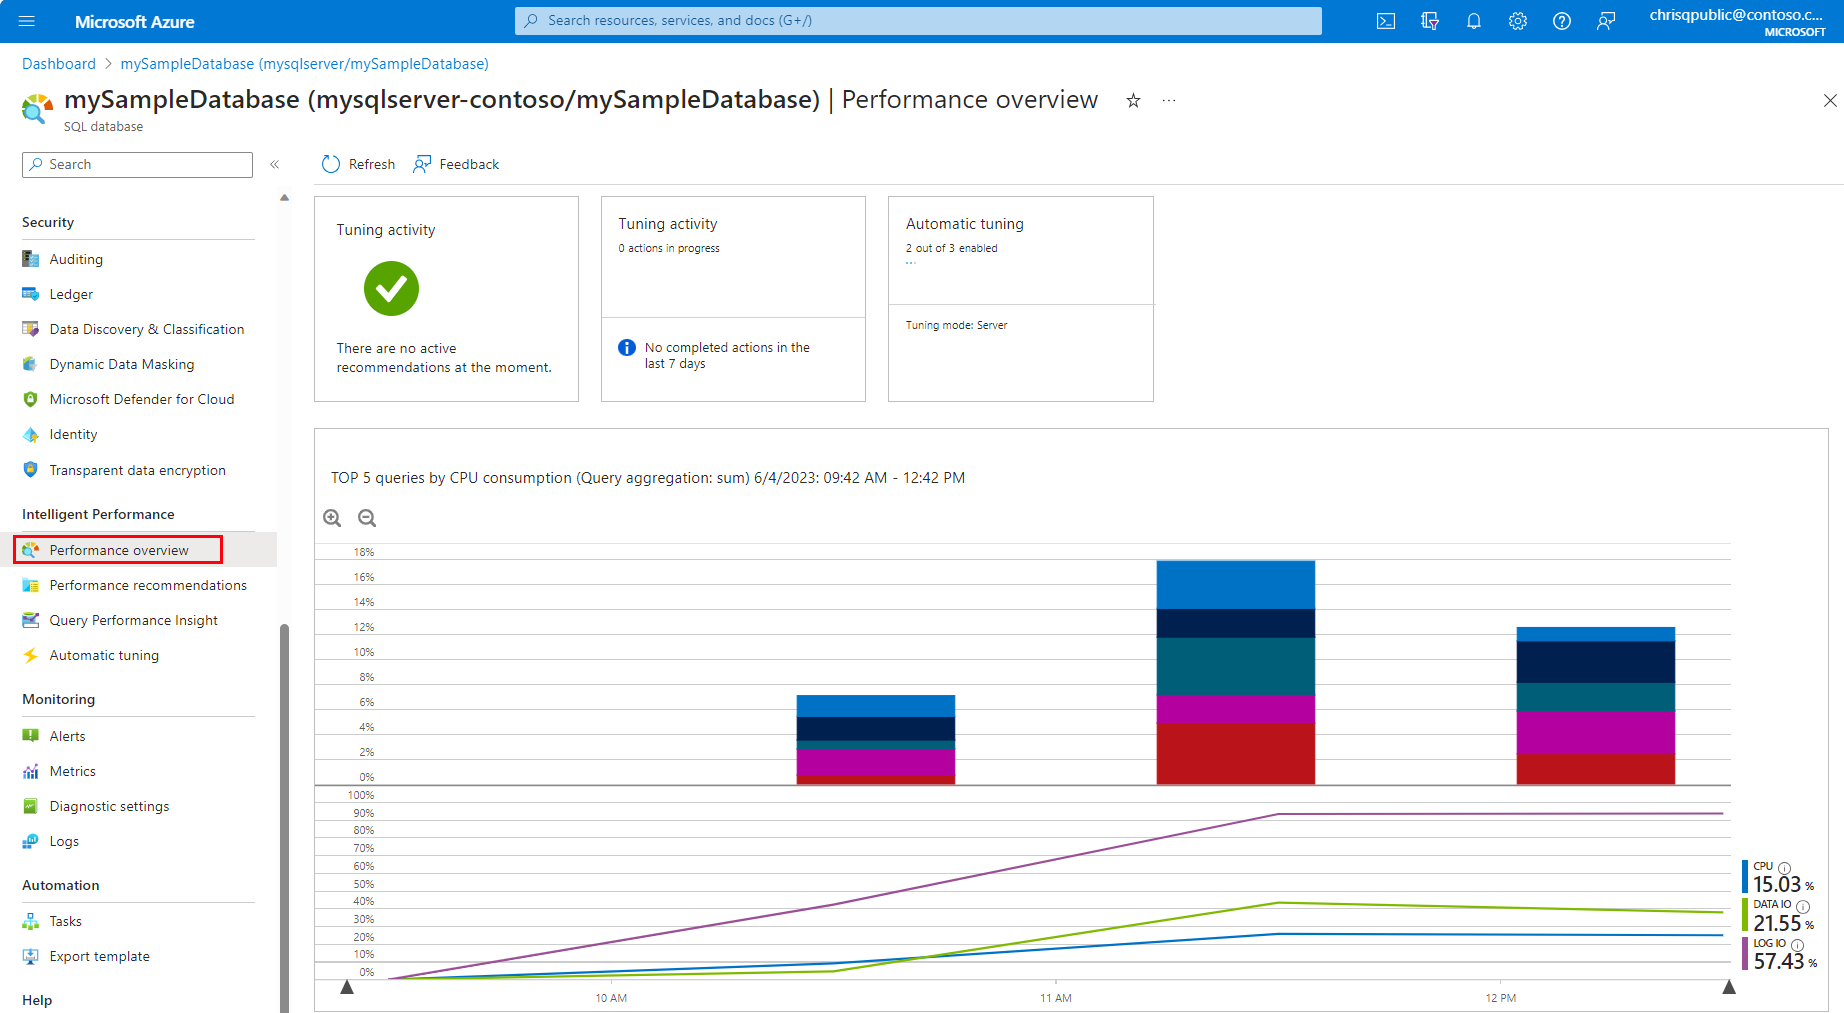 Performance overview for Azure SQL Database